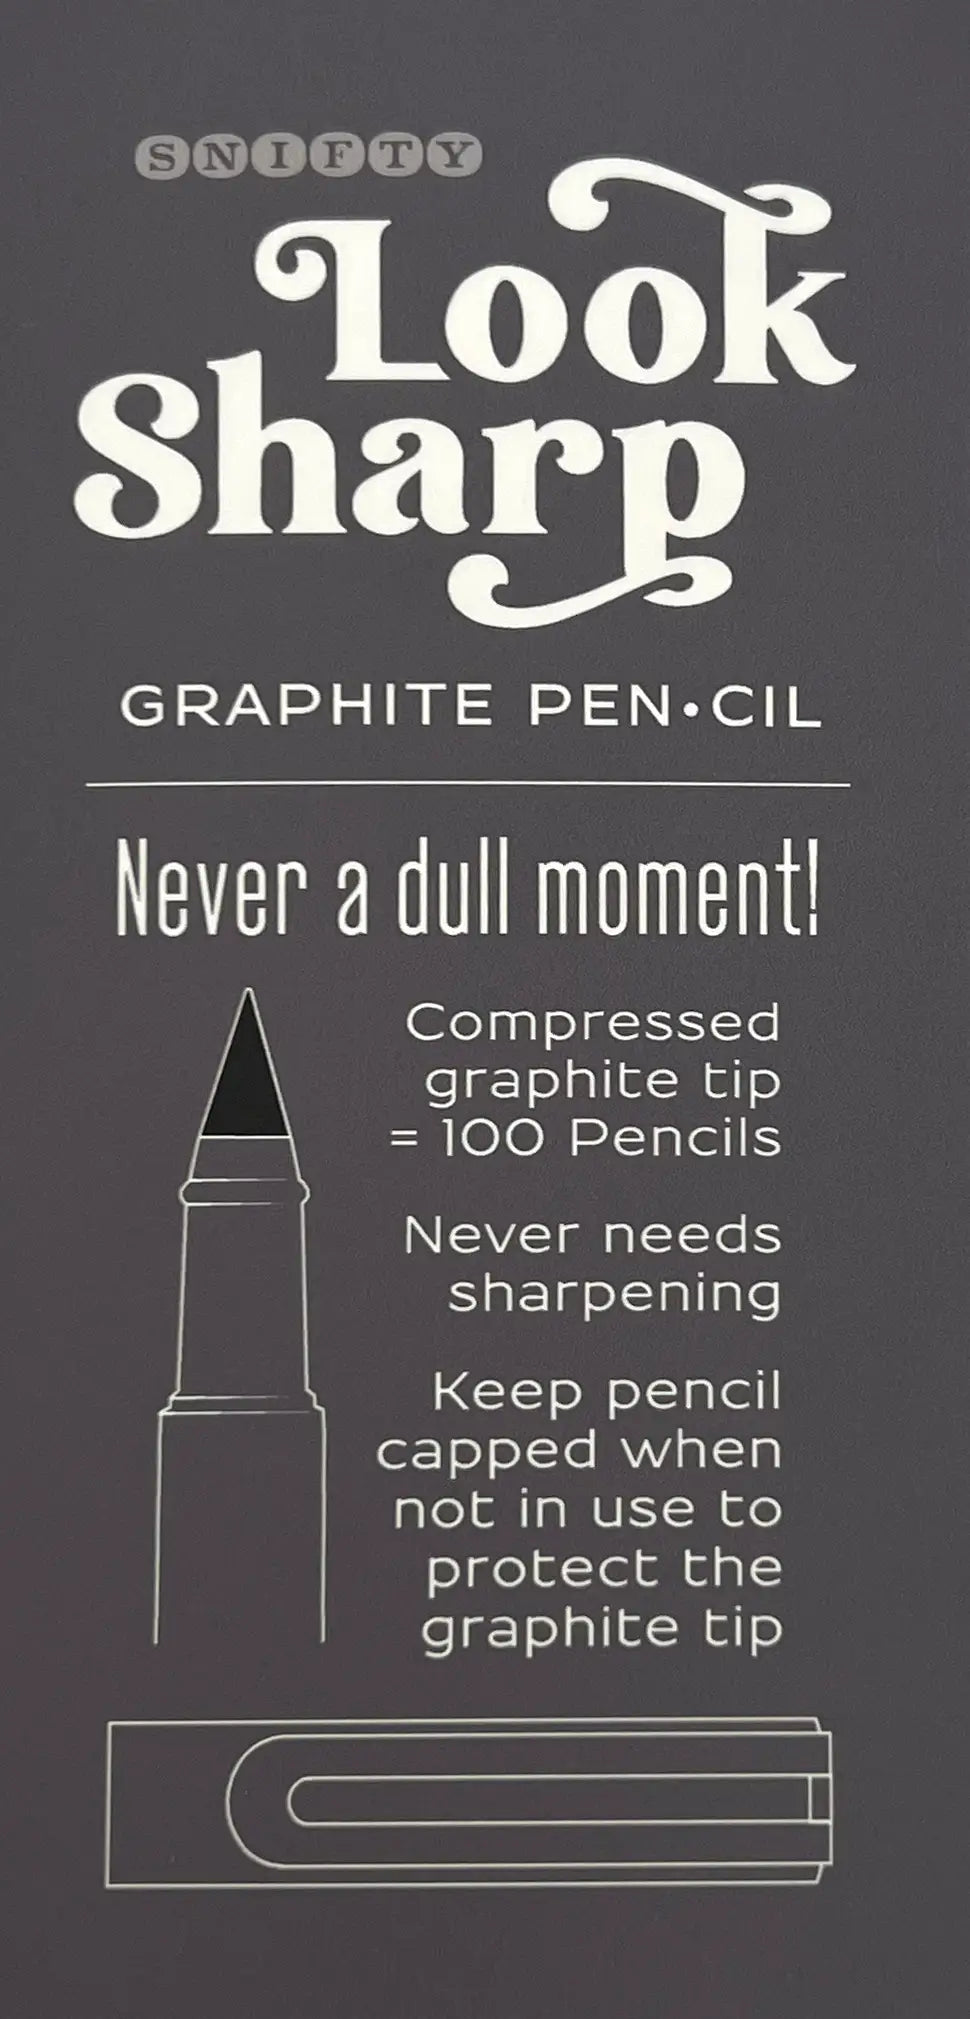 Look Sharp Graphite Pen-cil - Black